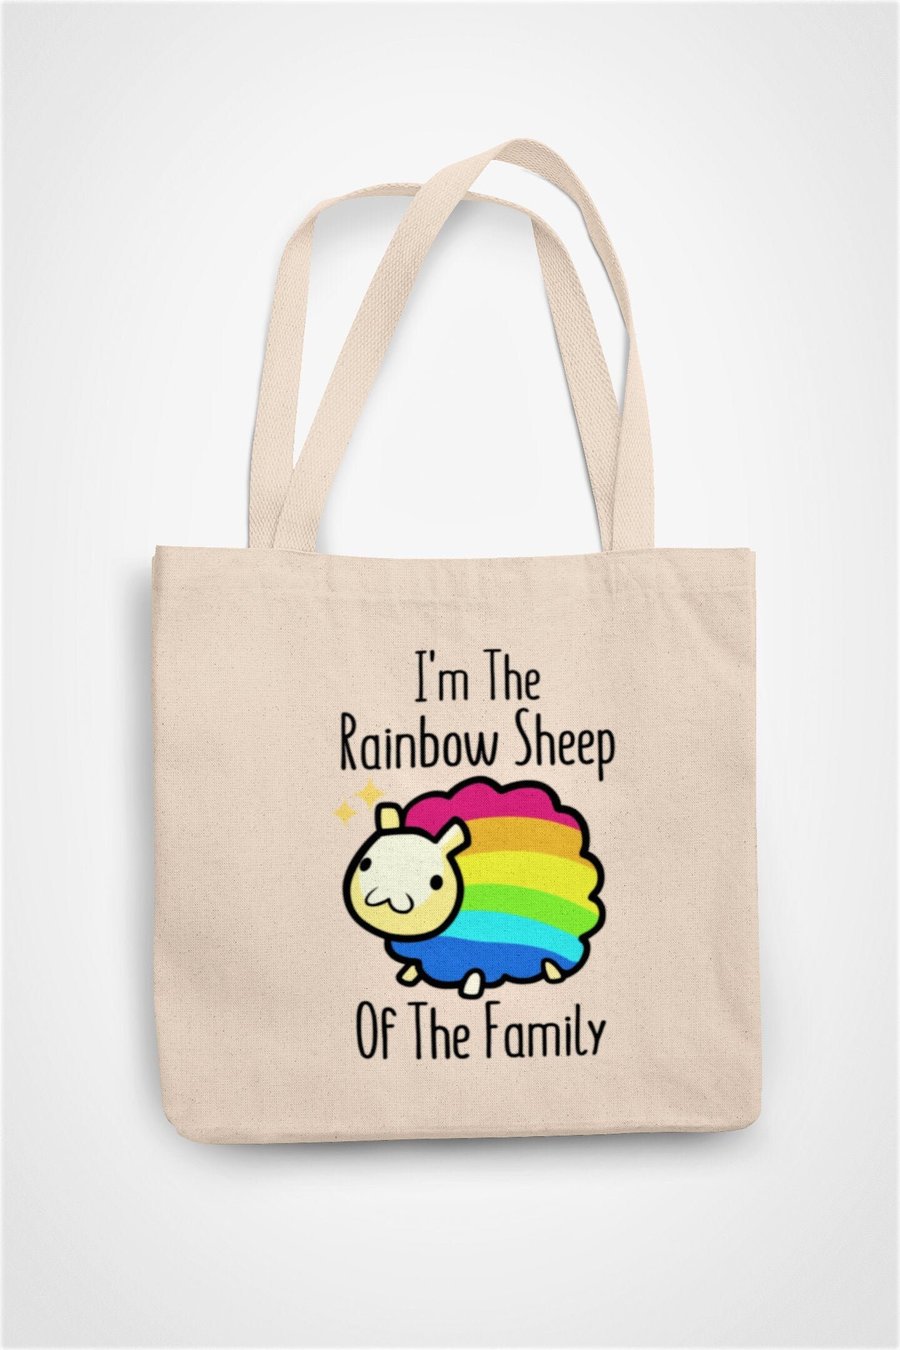 Im the rainbow sheep of the family Tote Bag Reusable Cotton bag - funny gay 